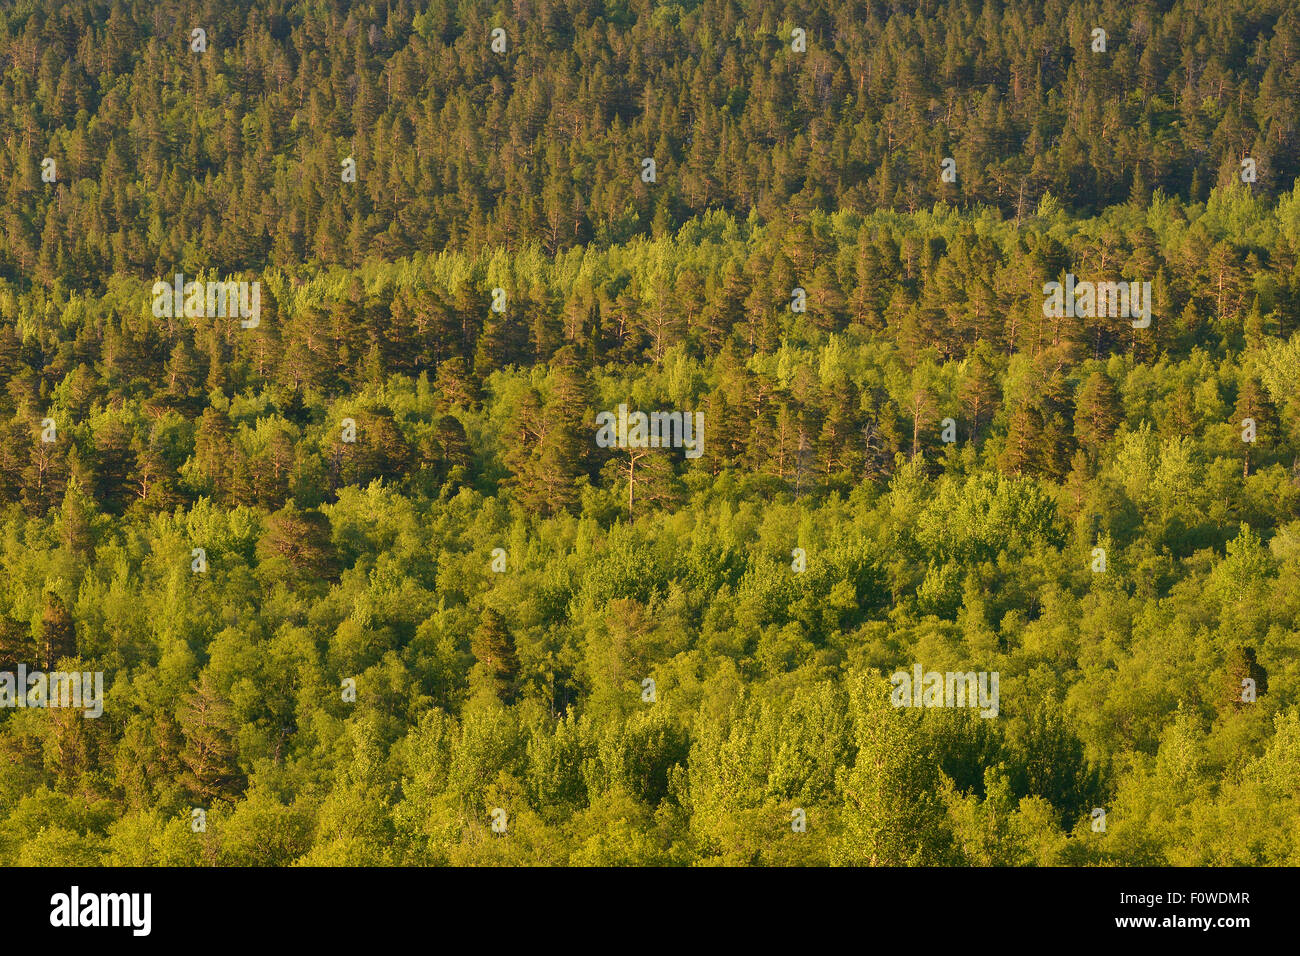 Taiga forest with Scots pine (Pinus sylvestris) Aspen (Populus tremula) and Mountain birch (Betula pubescens tortuosa) trees, Saltoluokta area, Greater Laponia Rewilding Area, Lapland, Norrbotten, Sweden, June 2013. Stock Photo